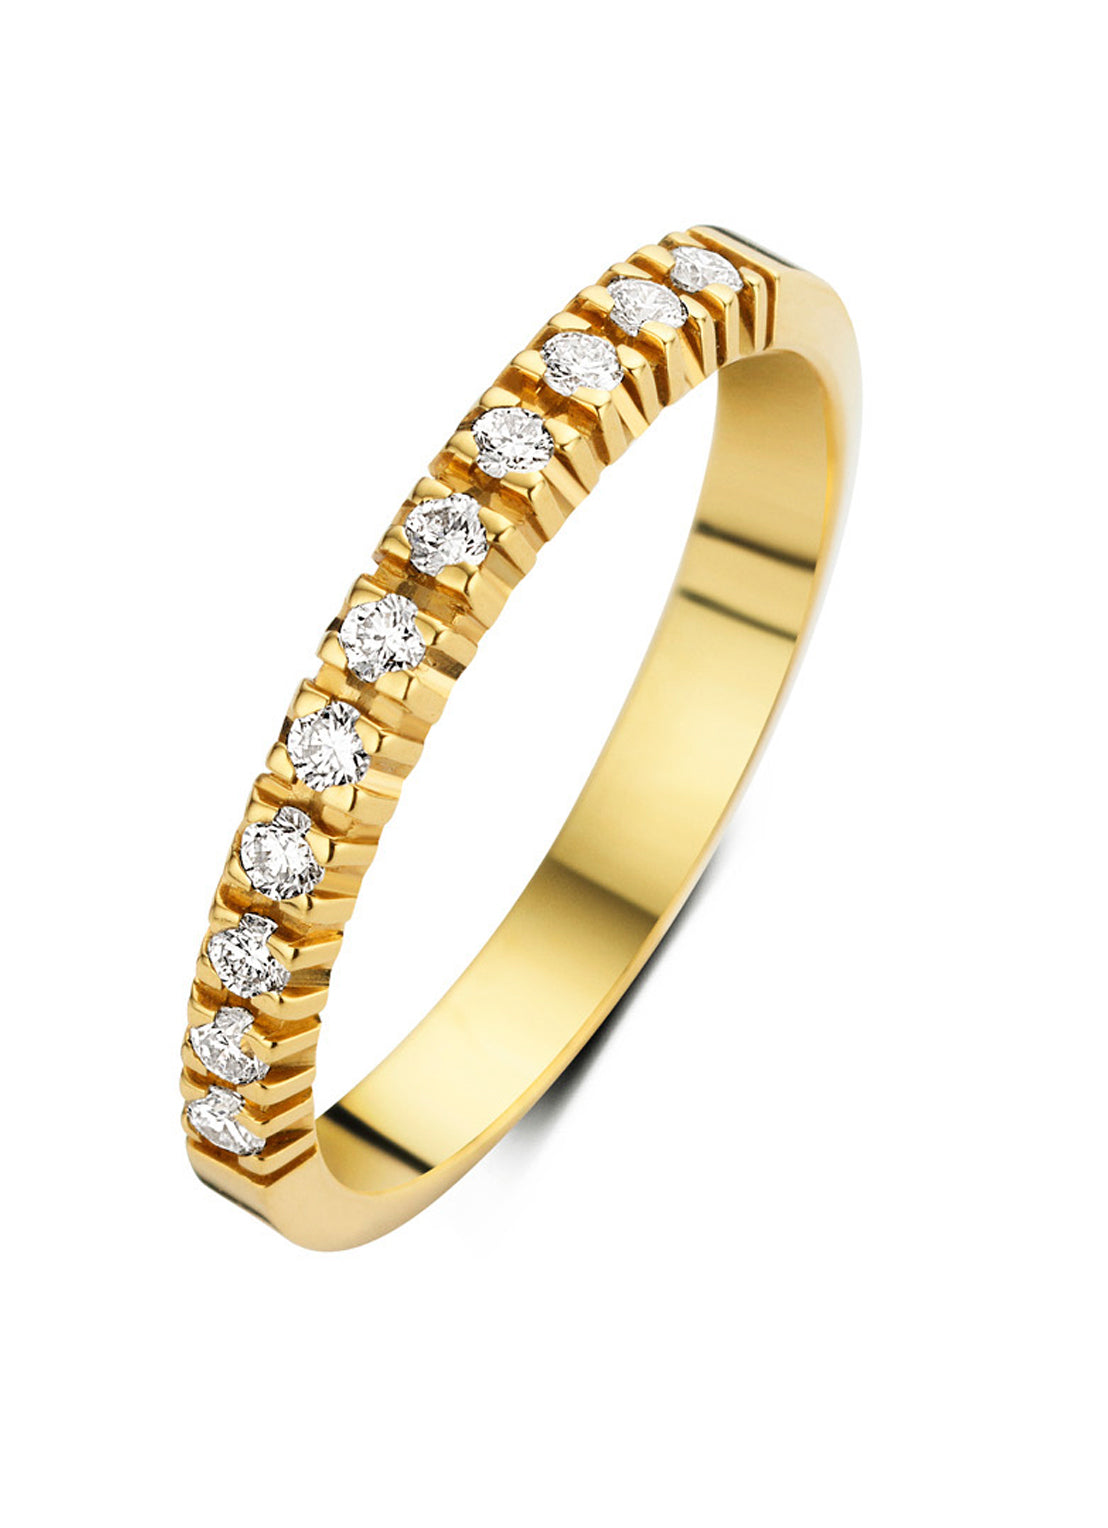 Yellow gold alliance ring, 0.33 ct diamond, Groeibriljant